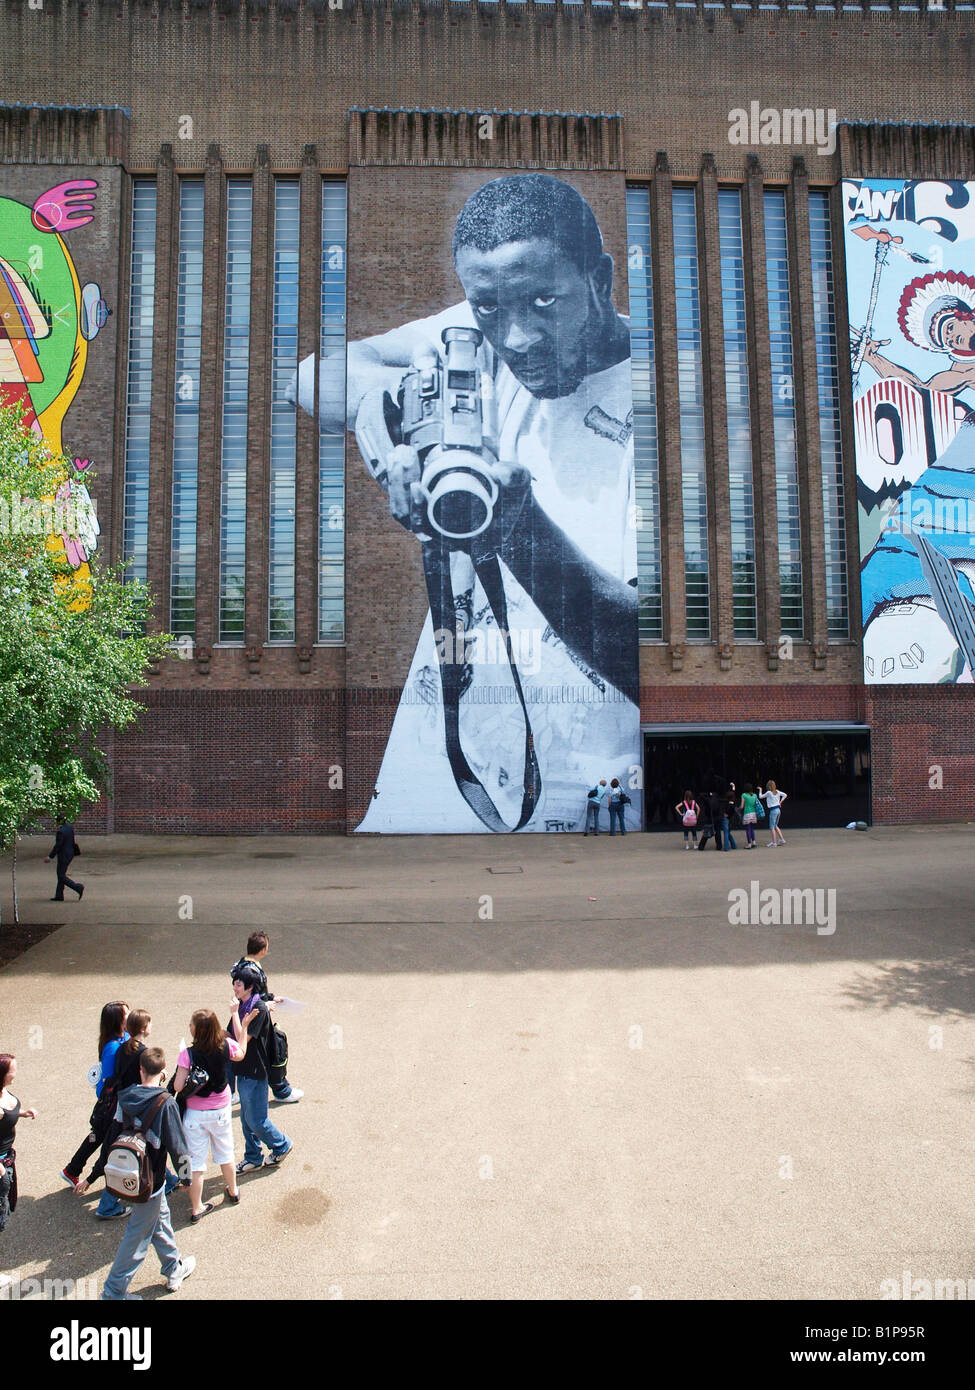 Street Art image by the Parisian artist JR on the Tate Modern London Stock Photo